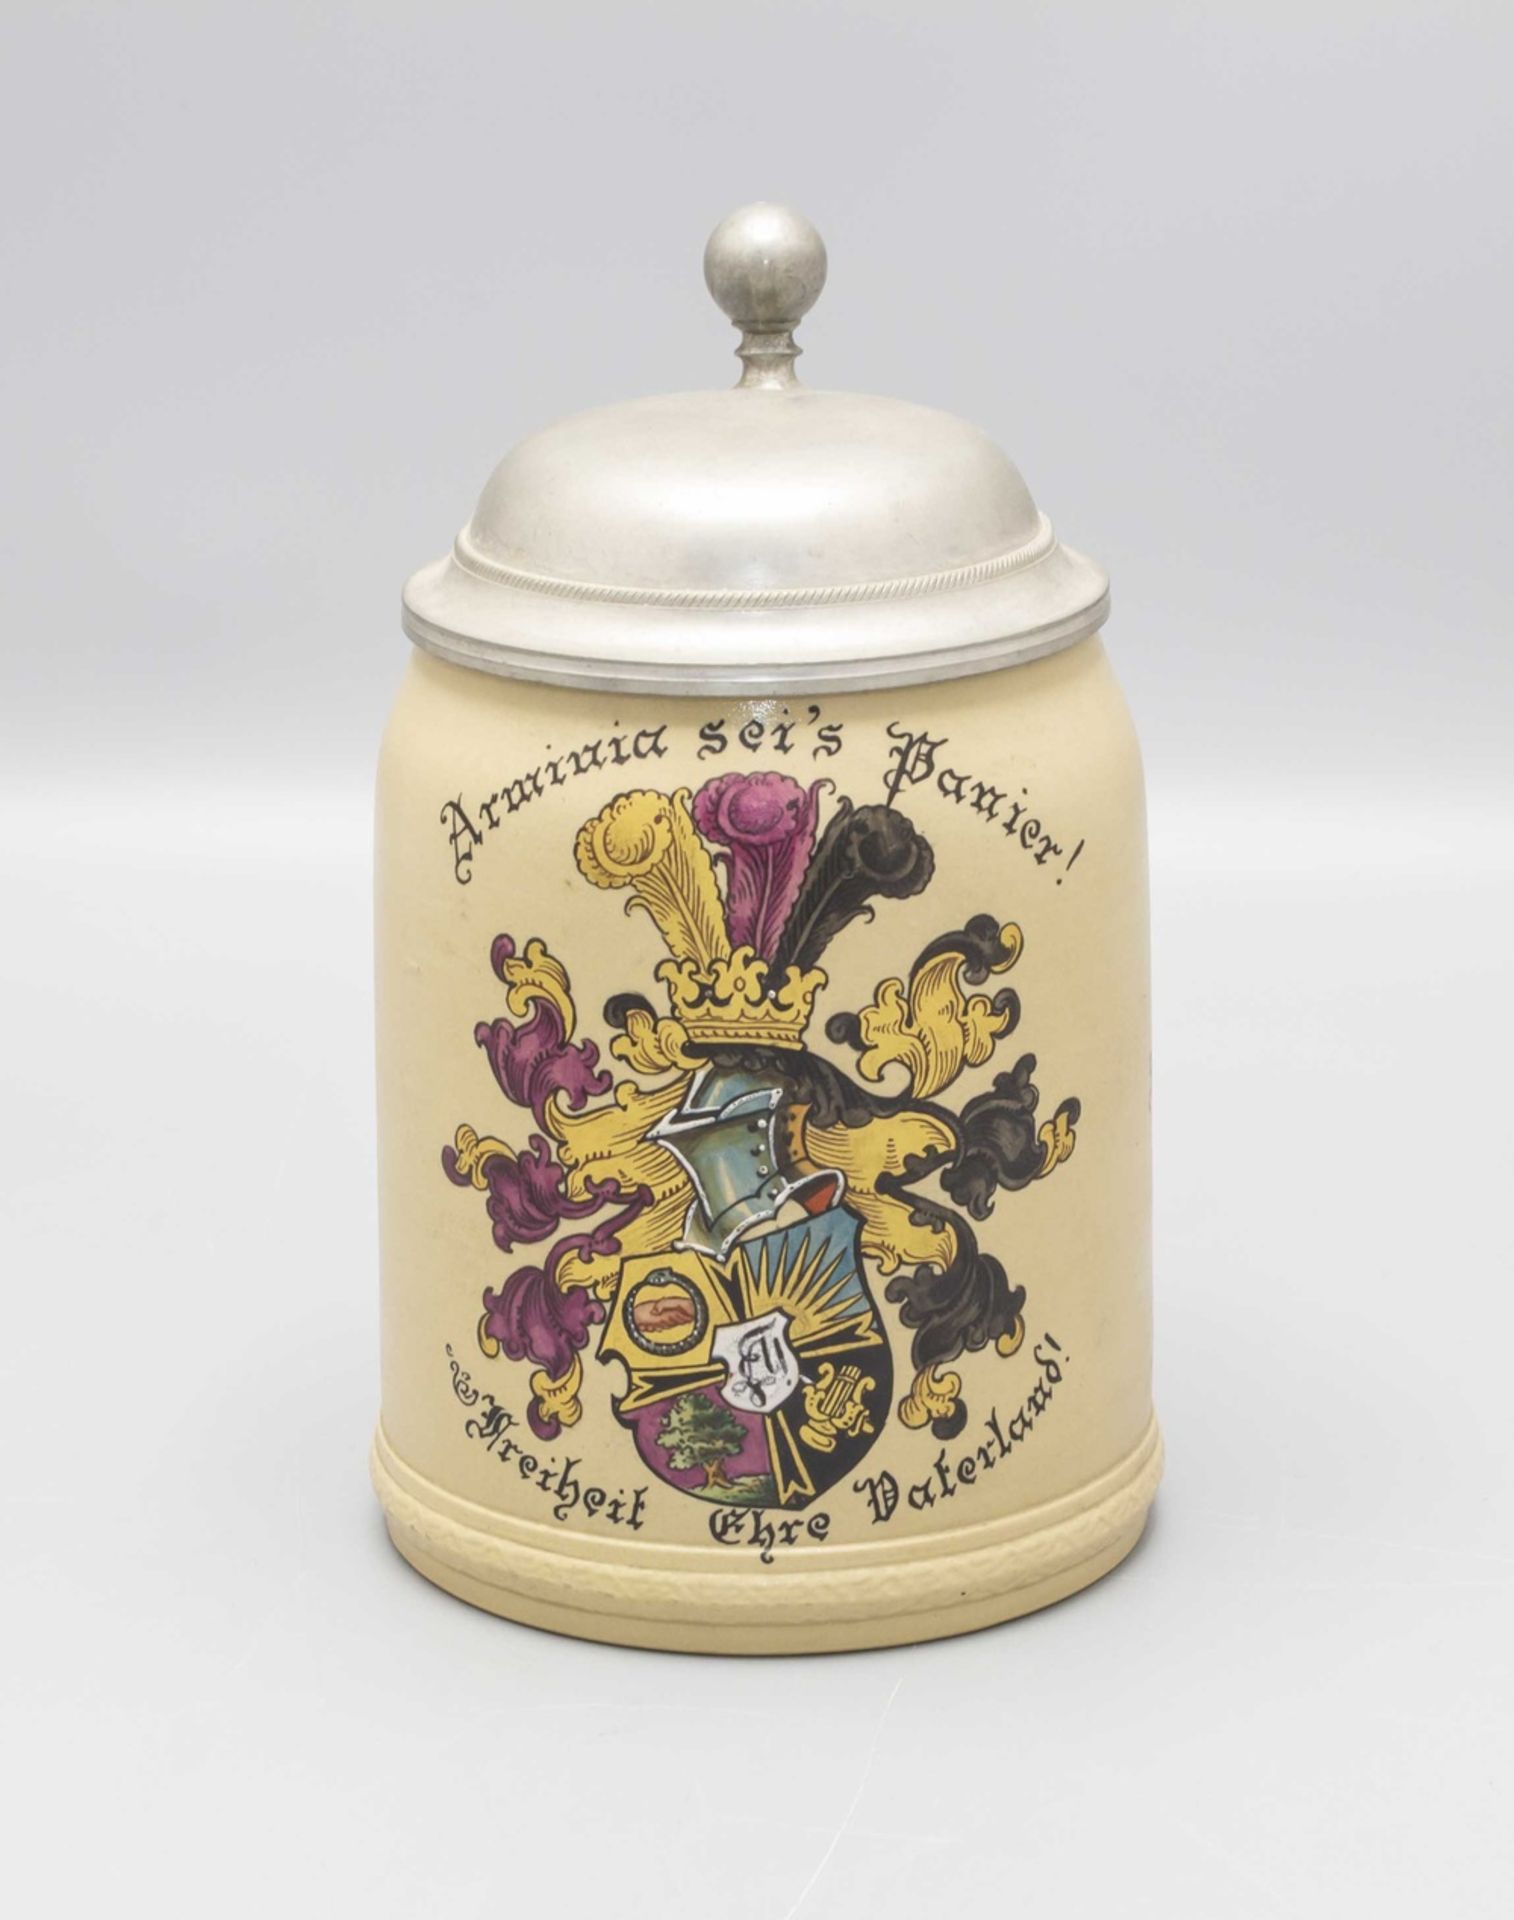 Studentika Bierkrug 'Corps Arminia' / A students beer mug 'Corps Arminia', um 1932